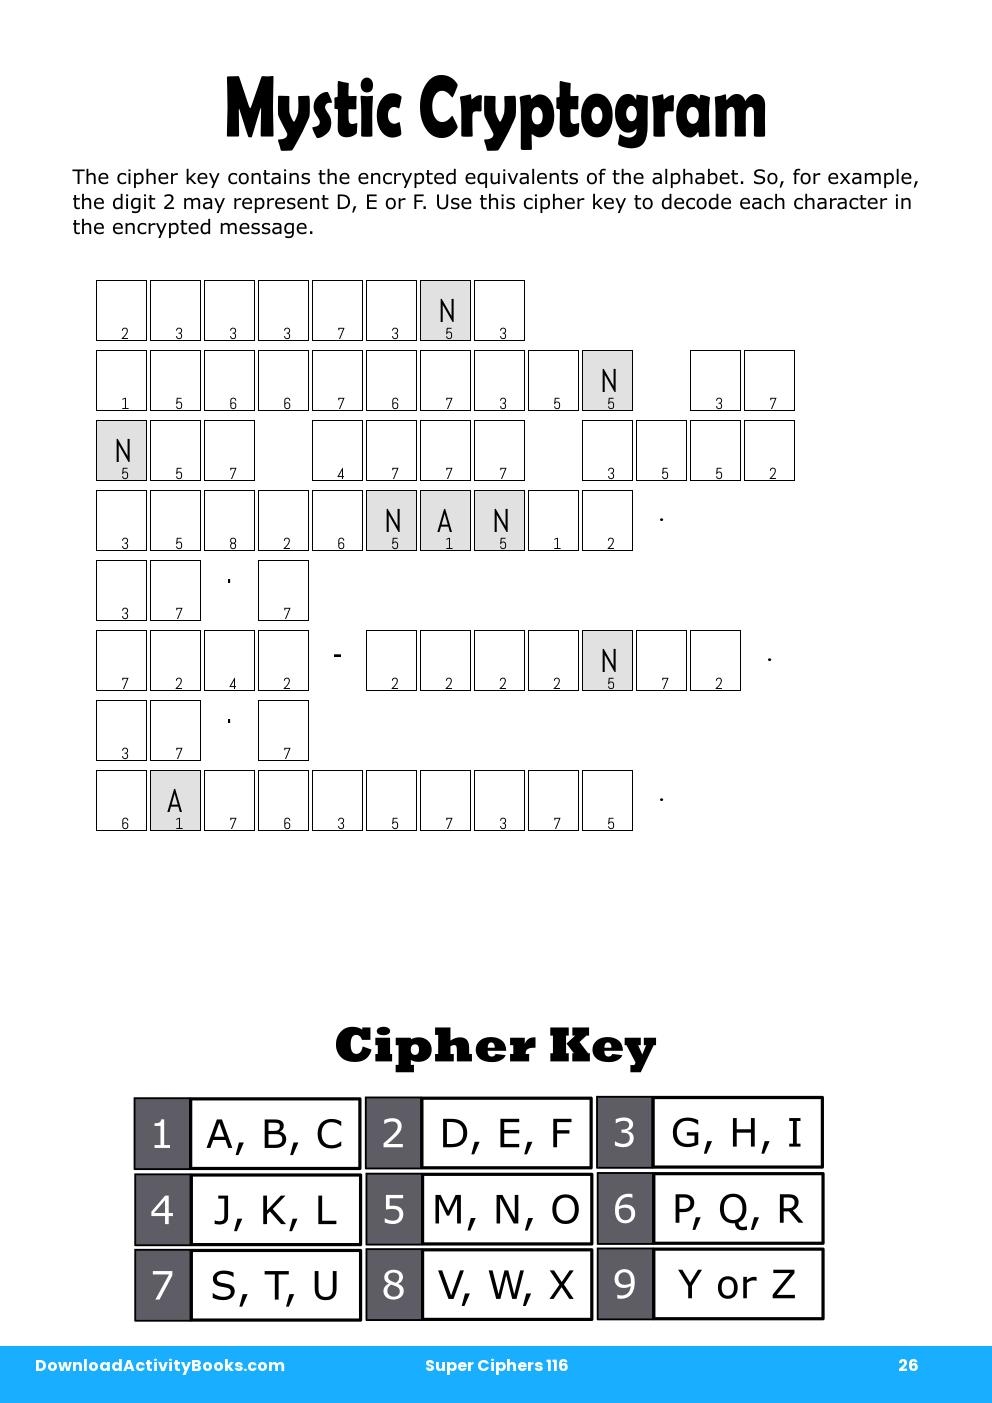 Mystic Cryptogram in Super Ciphers 116